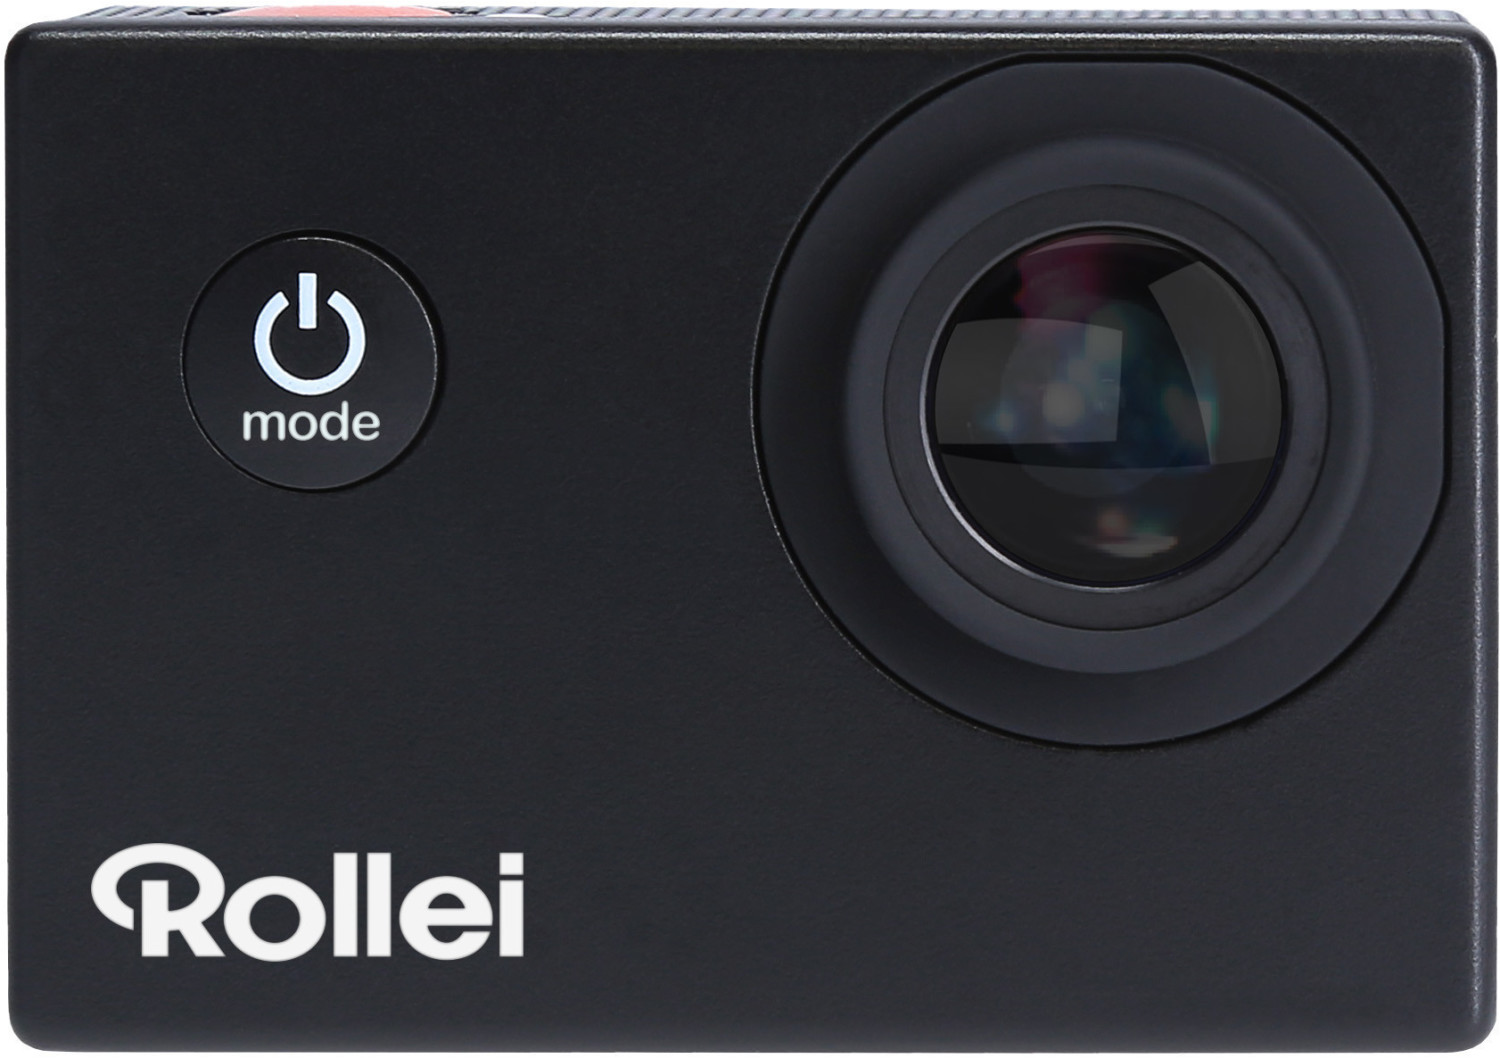 Rollei Actioncam 540 Standard Edition